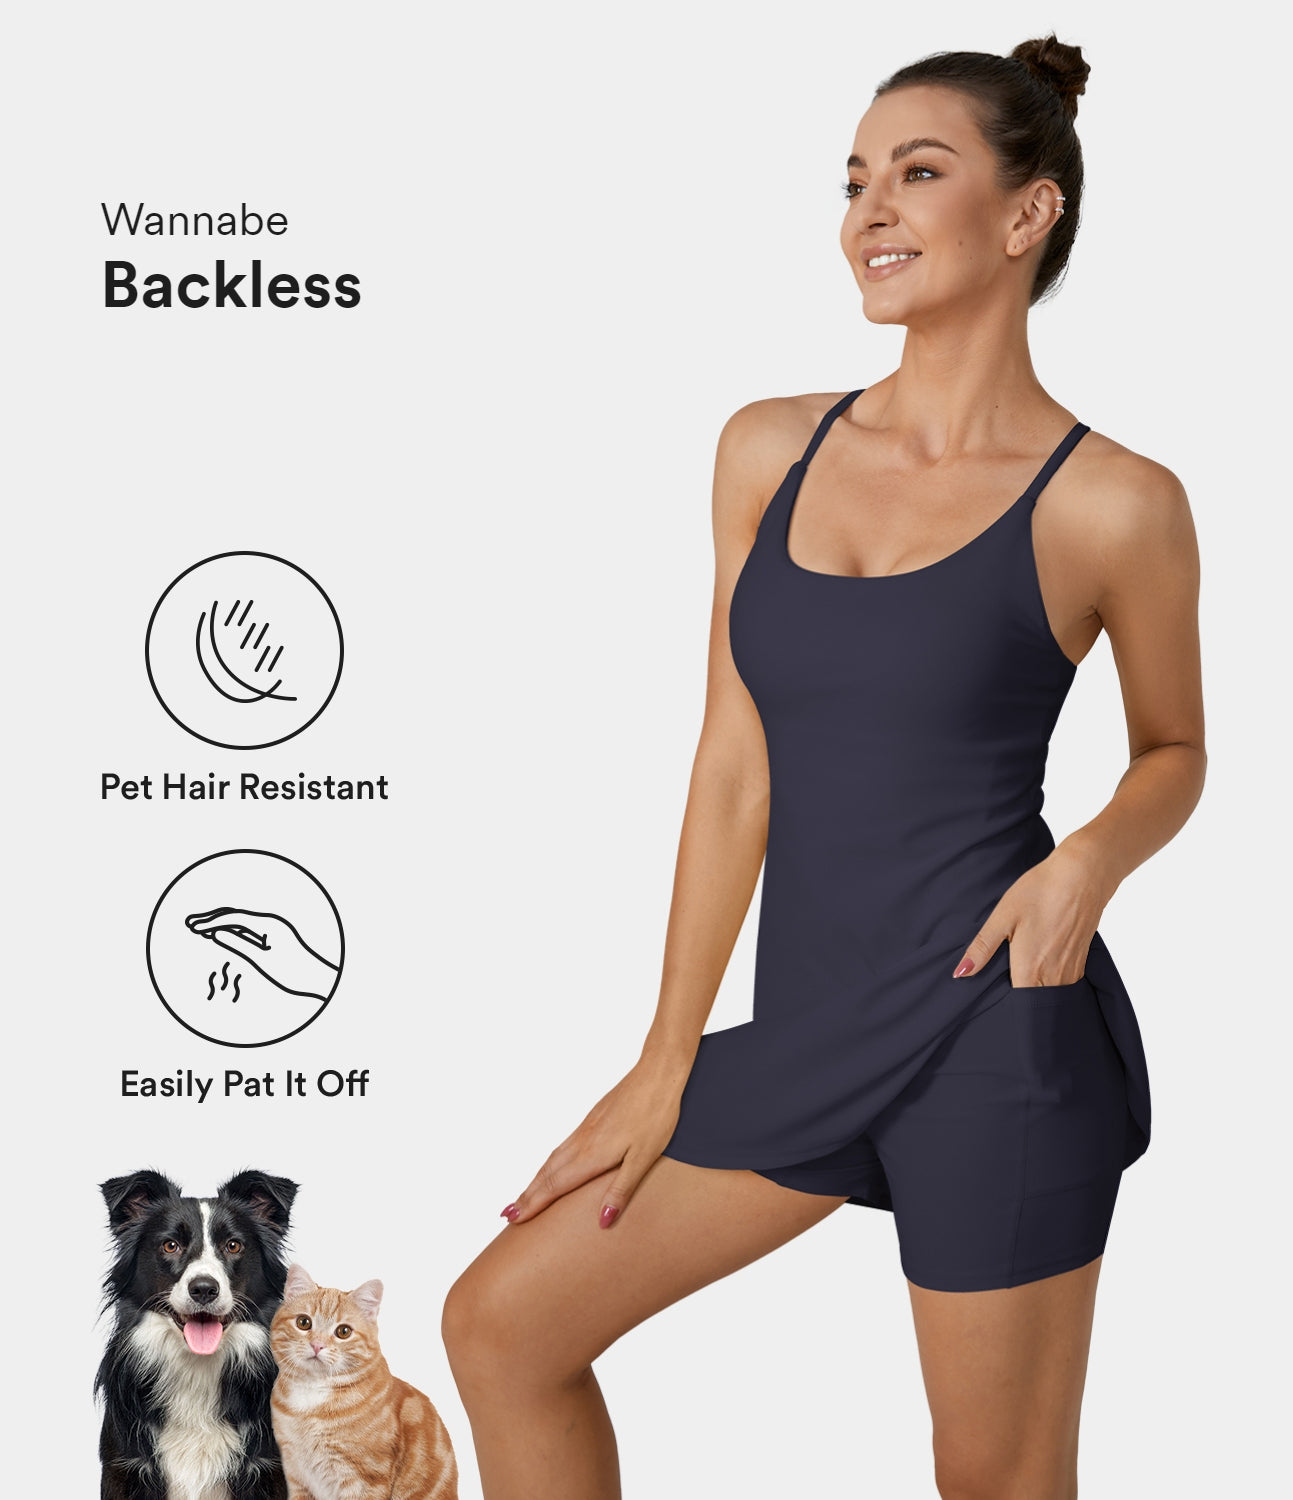 

Halara PatitoffВ® Flow Pet Hair Resistant Backless Crisscross 2-in-1 Pocket Flare Dance Active Dress Workout Dress - Black